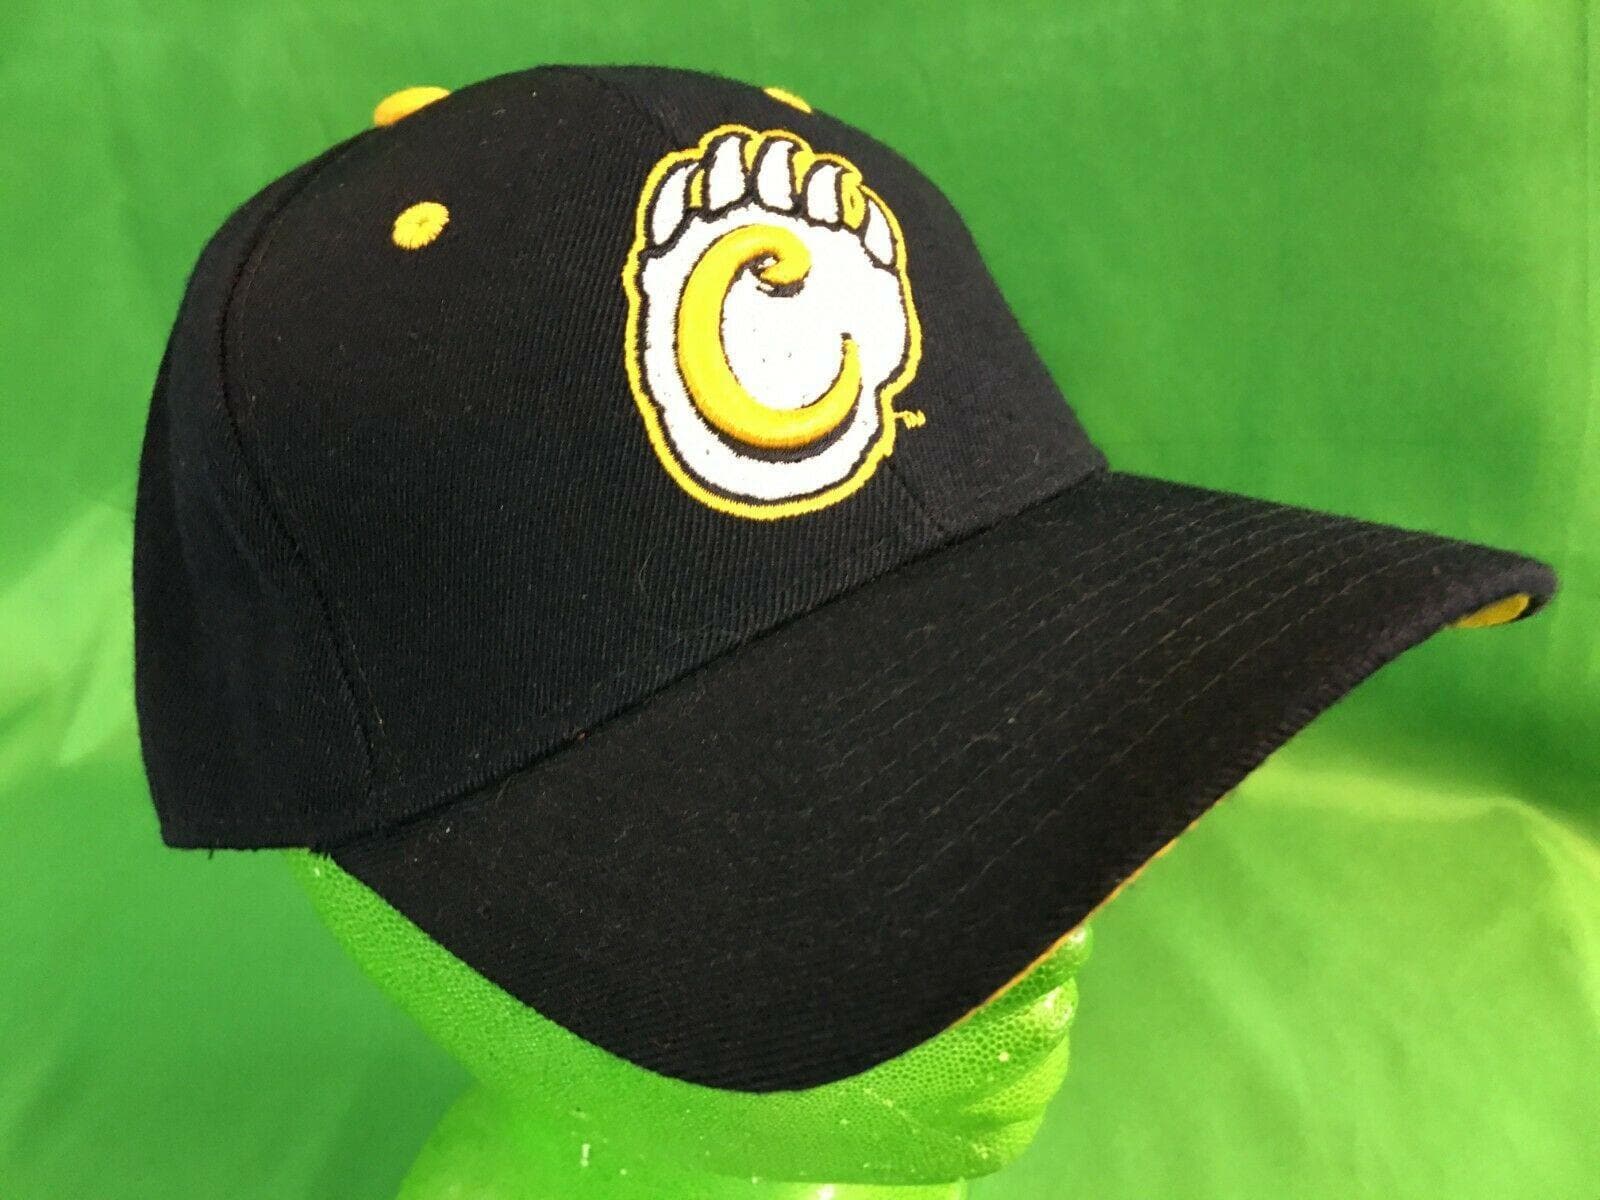 NCAA California Golden Bears Zephyr Black Hat/Cap 7-3/8 NWT